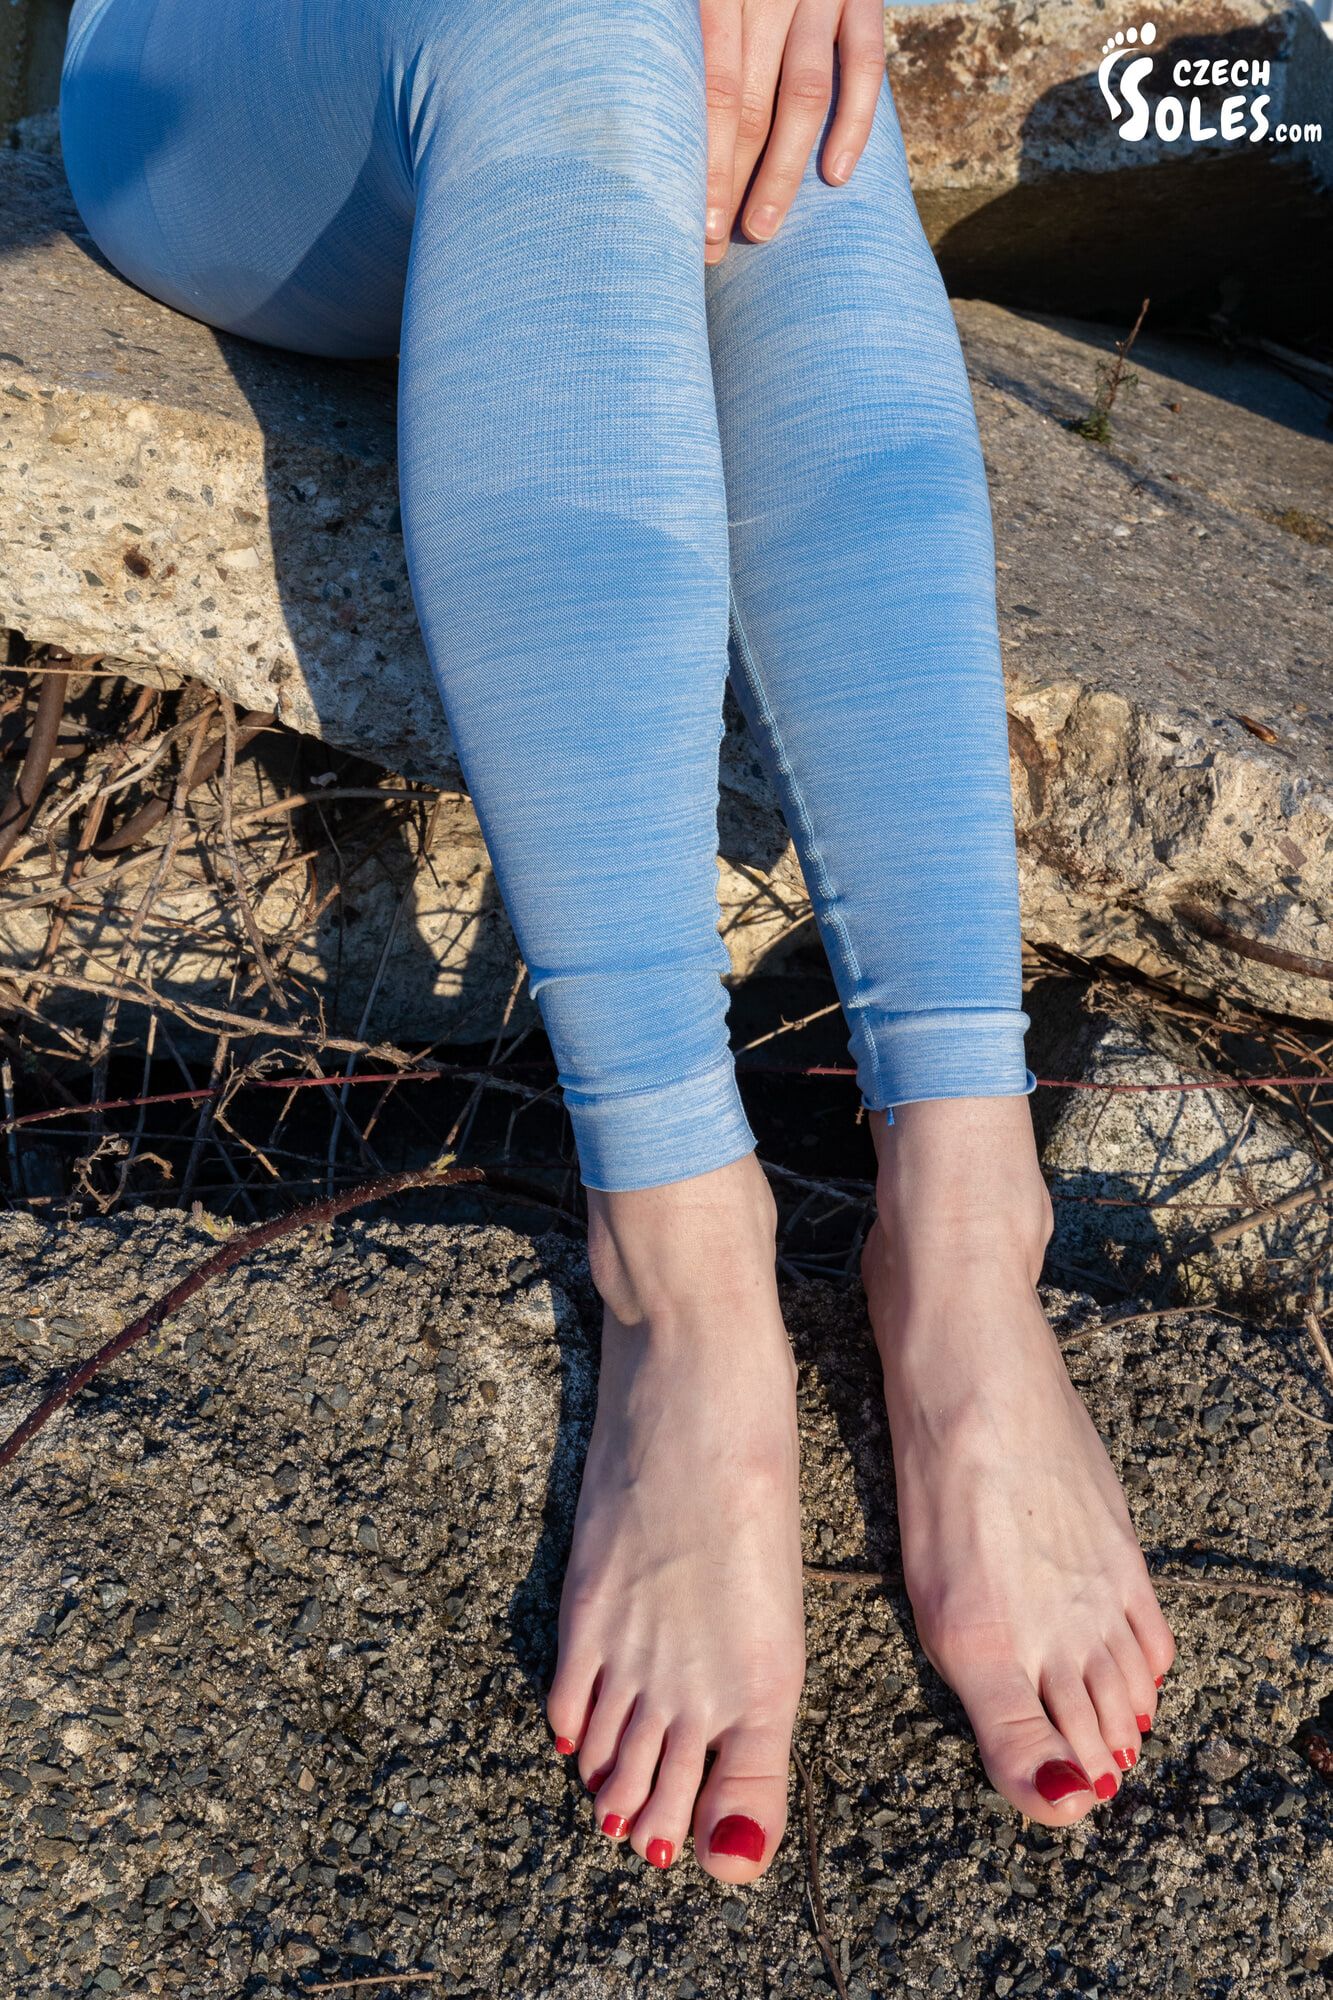 Jogging feet and white socks tease #7